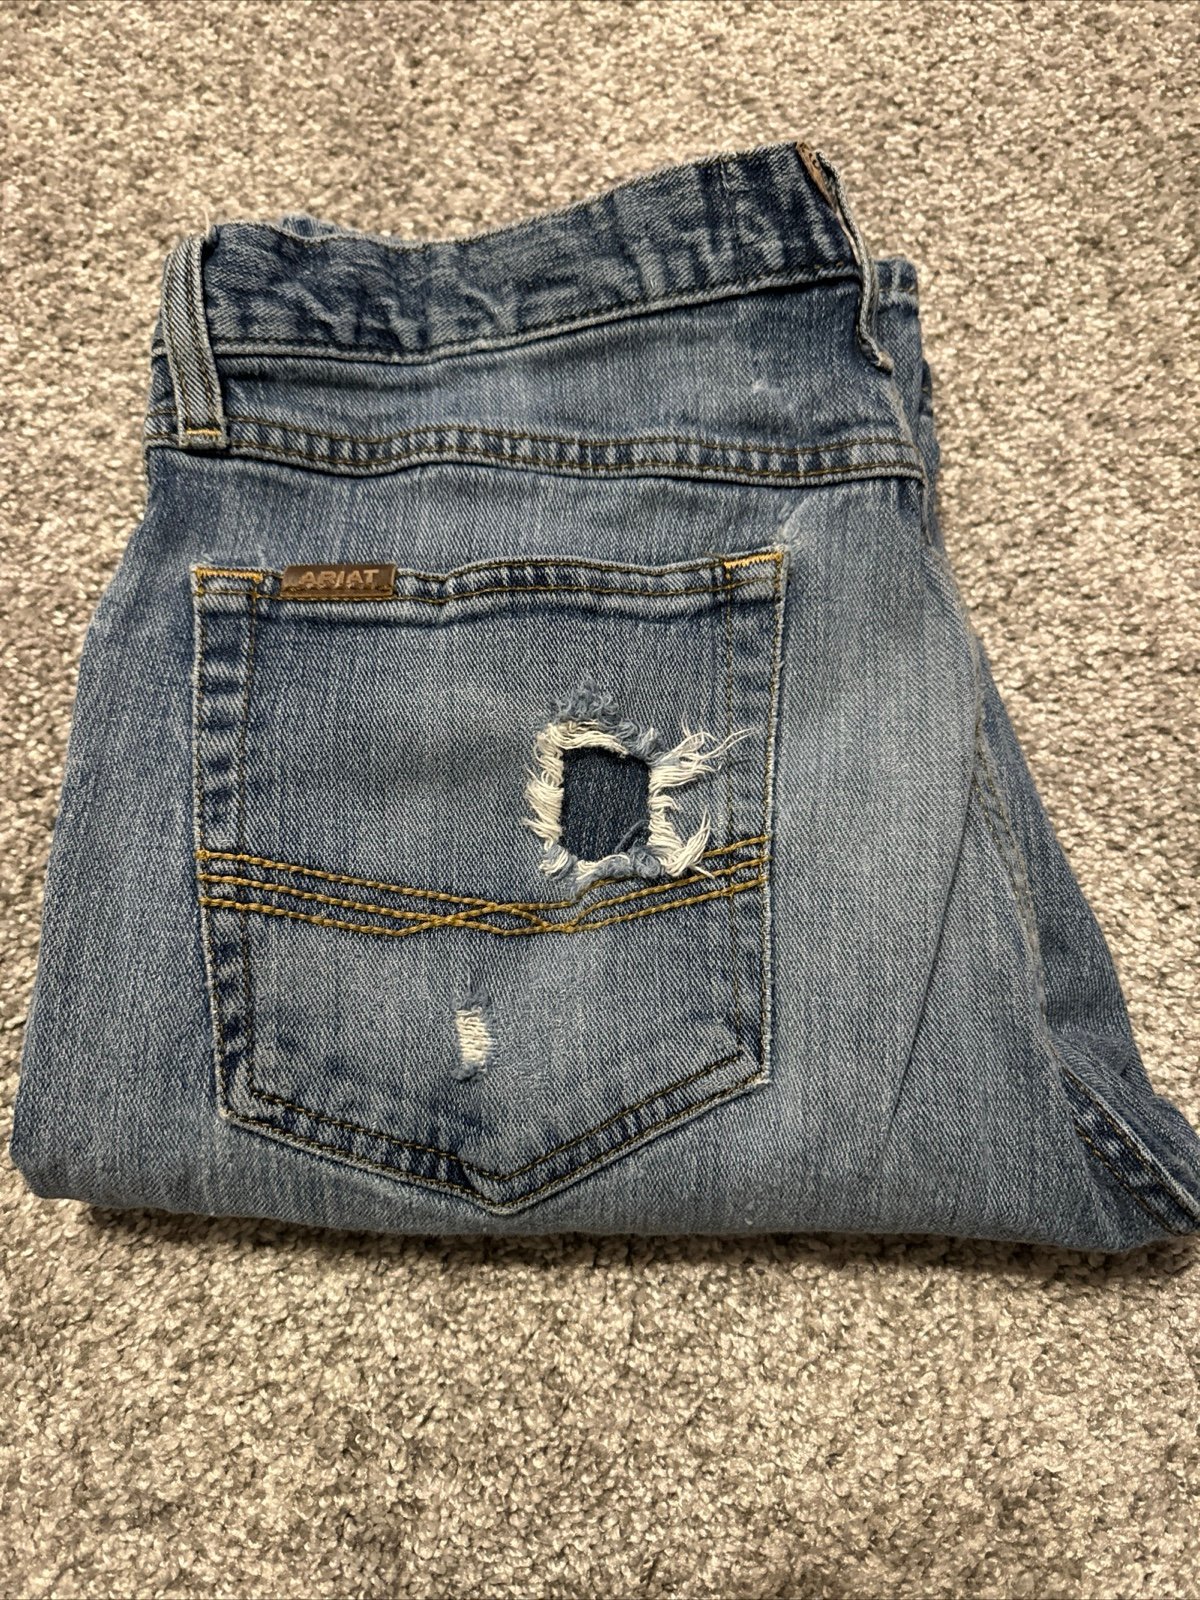 Ariat Jeans Men´s 32x34 Blue Pants M4 Low Rise Boot Light Faded Denim Thrashed fcs6S1Mcl